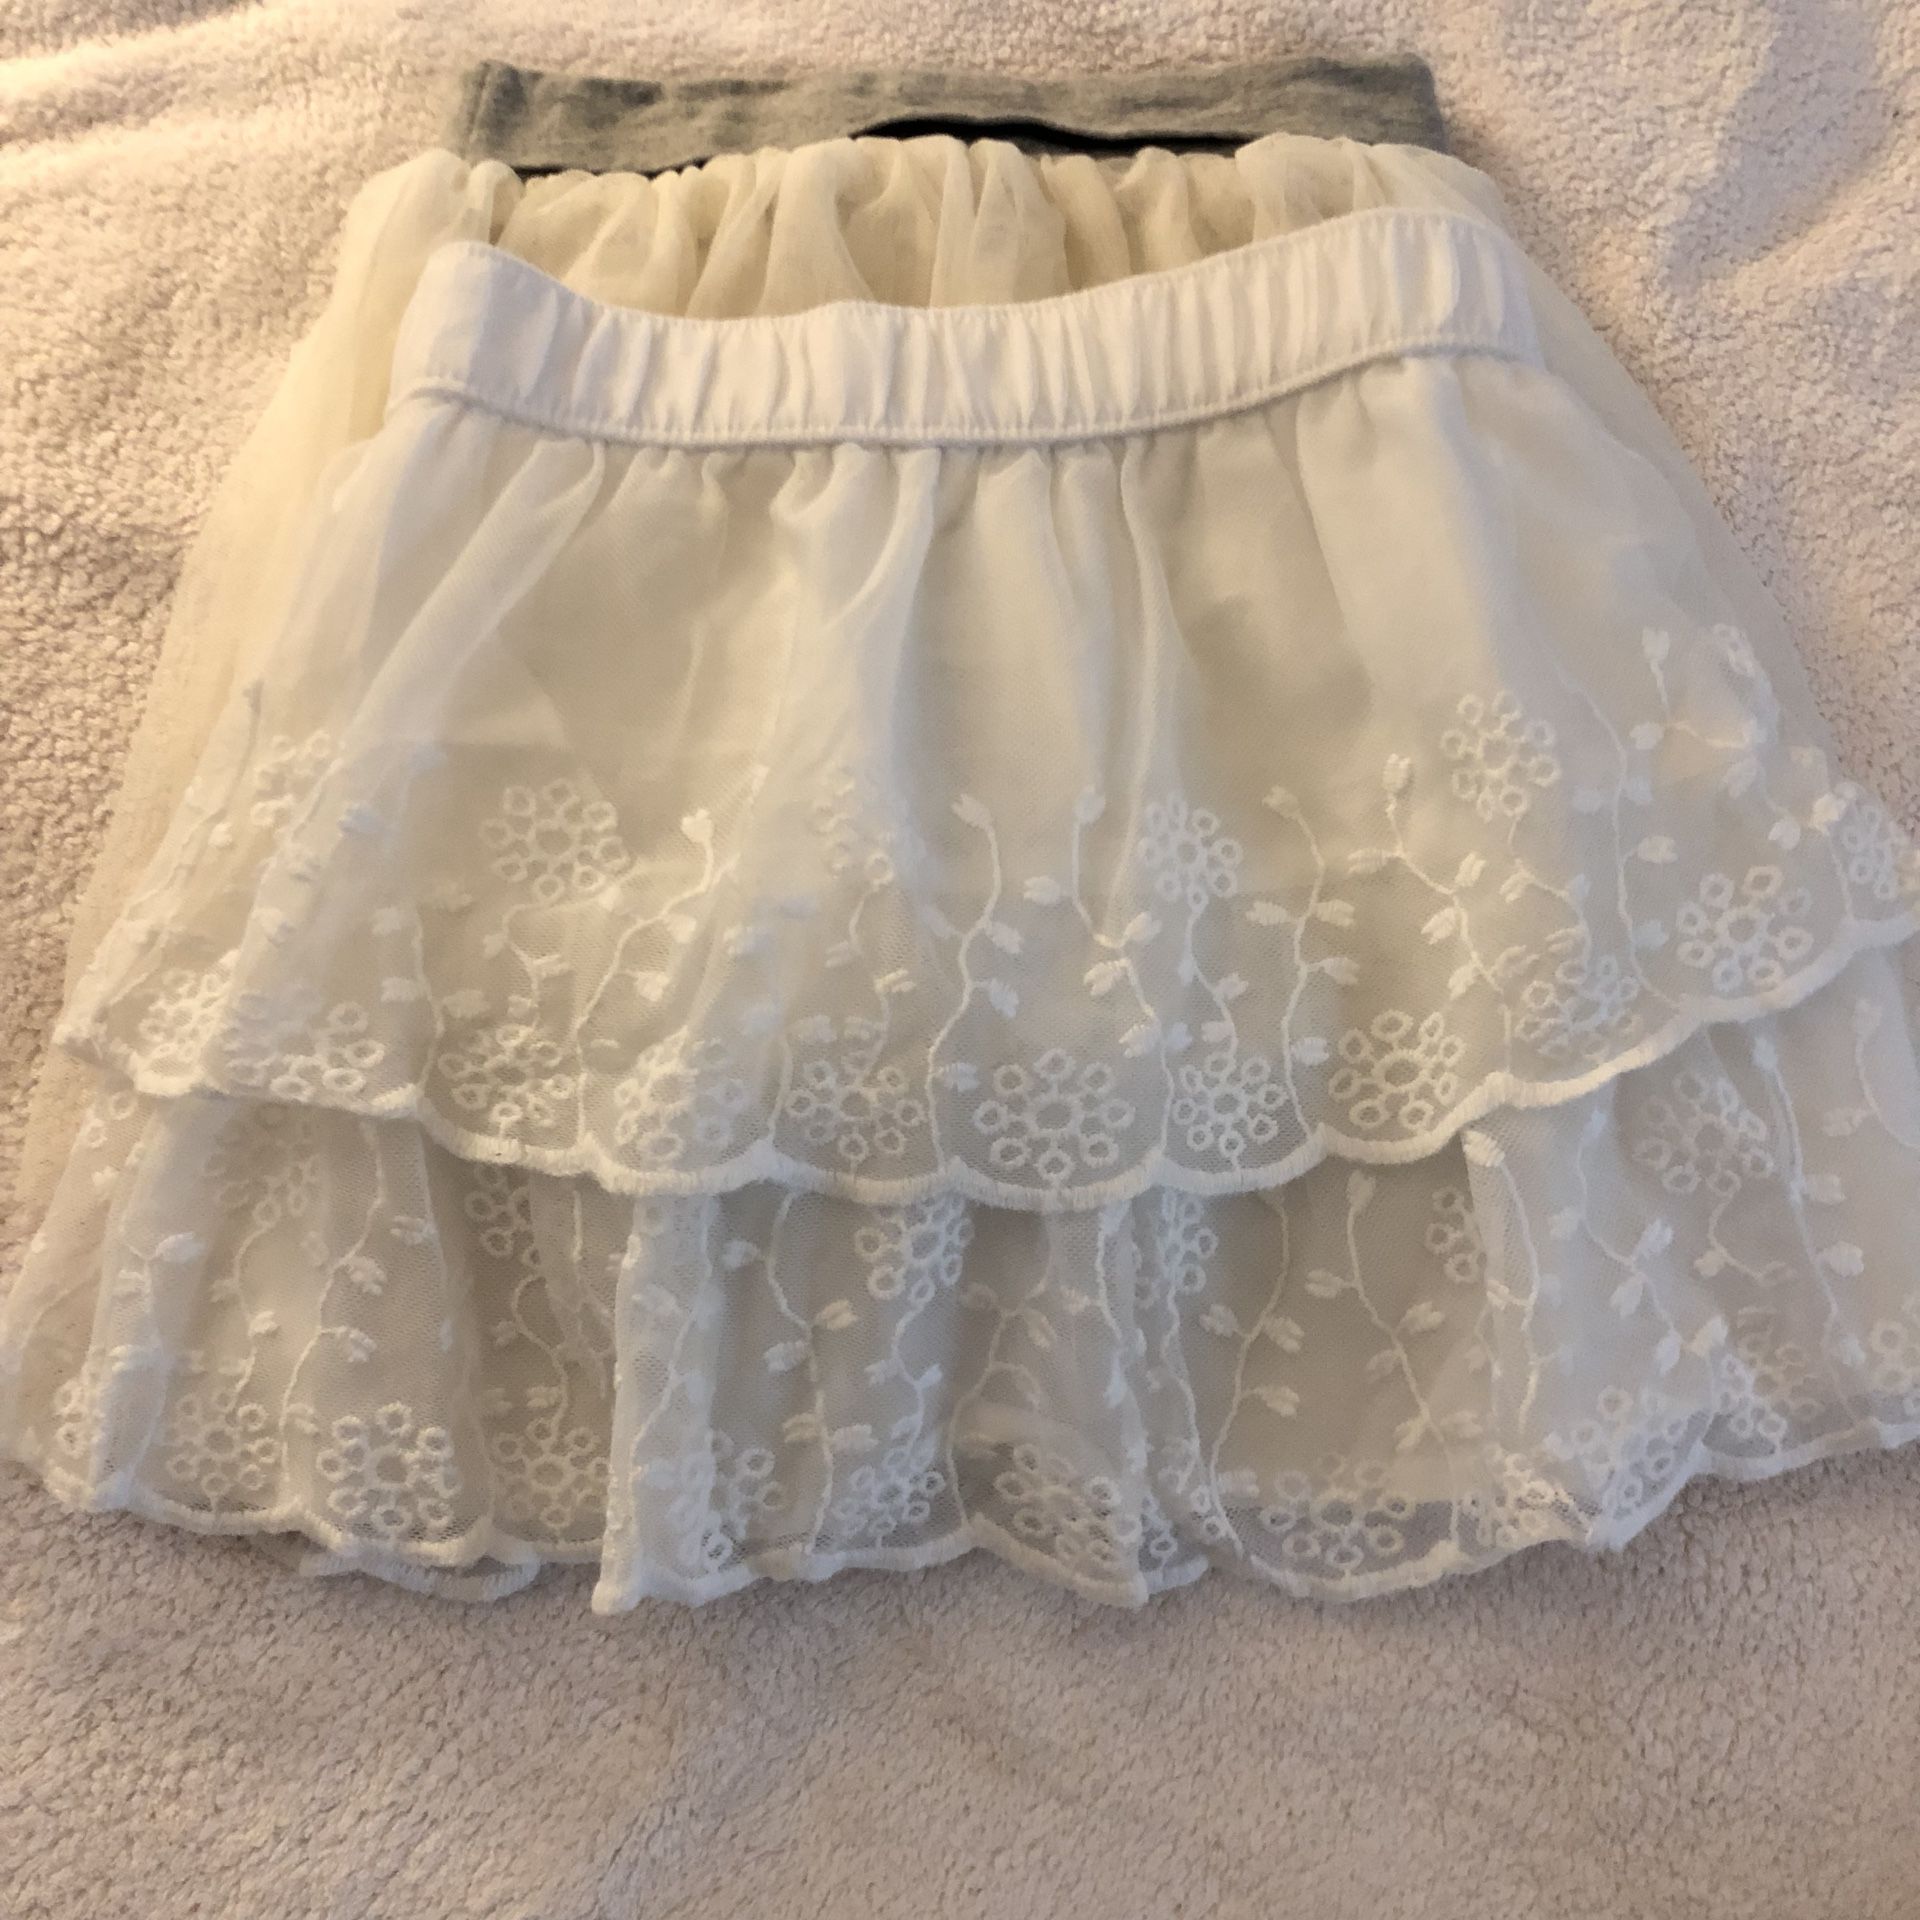 Children's Clothing Brand New> Girls size m> 2 skirts> 1 Gap Tulle skirt MSRP $26.95 • Carter's White lace layers skirt $19.99